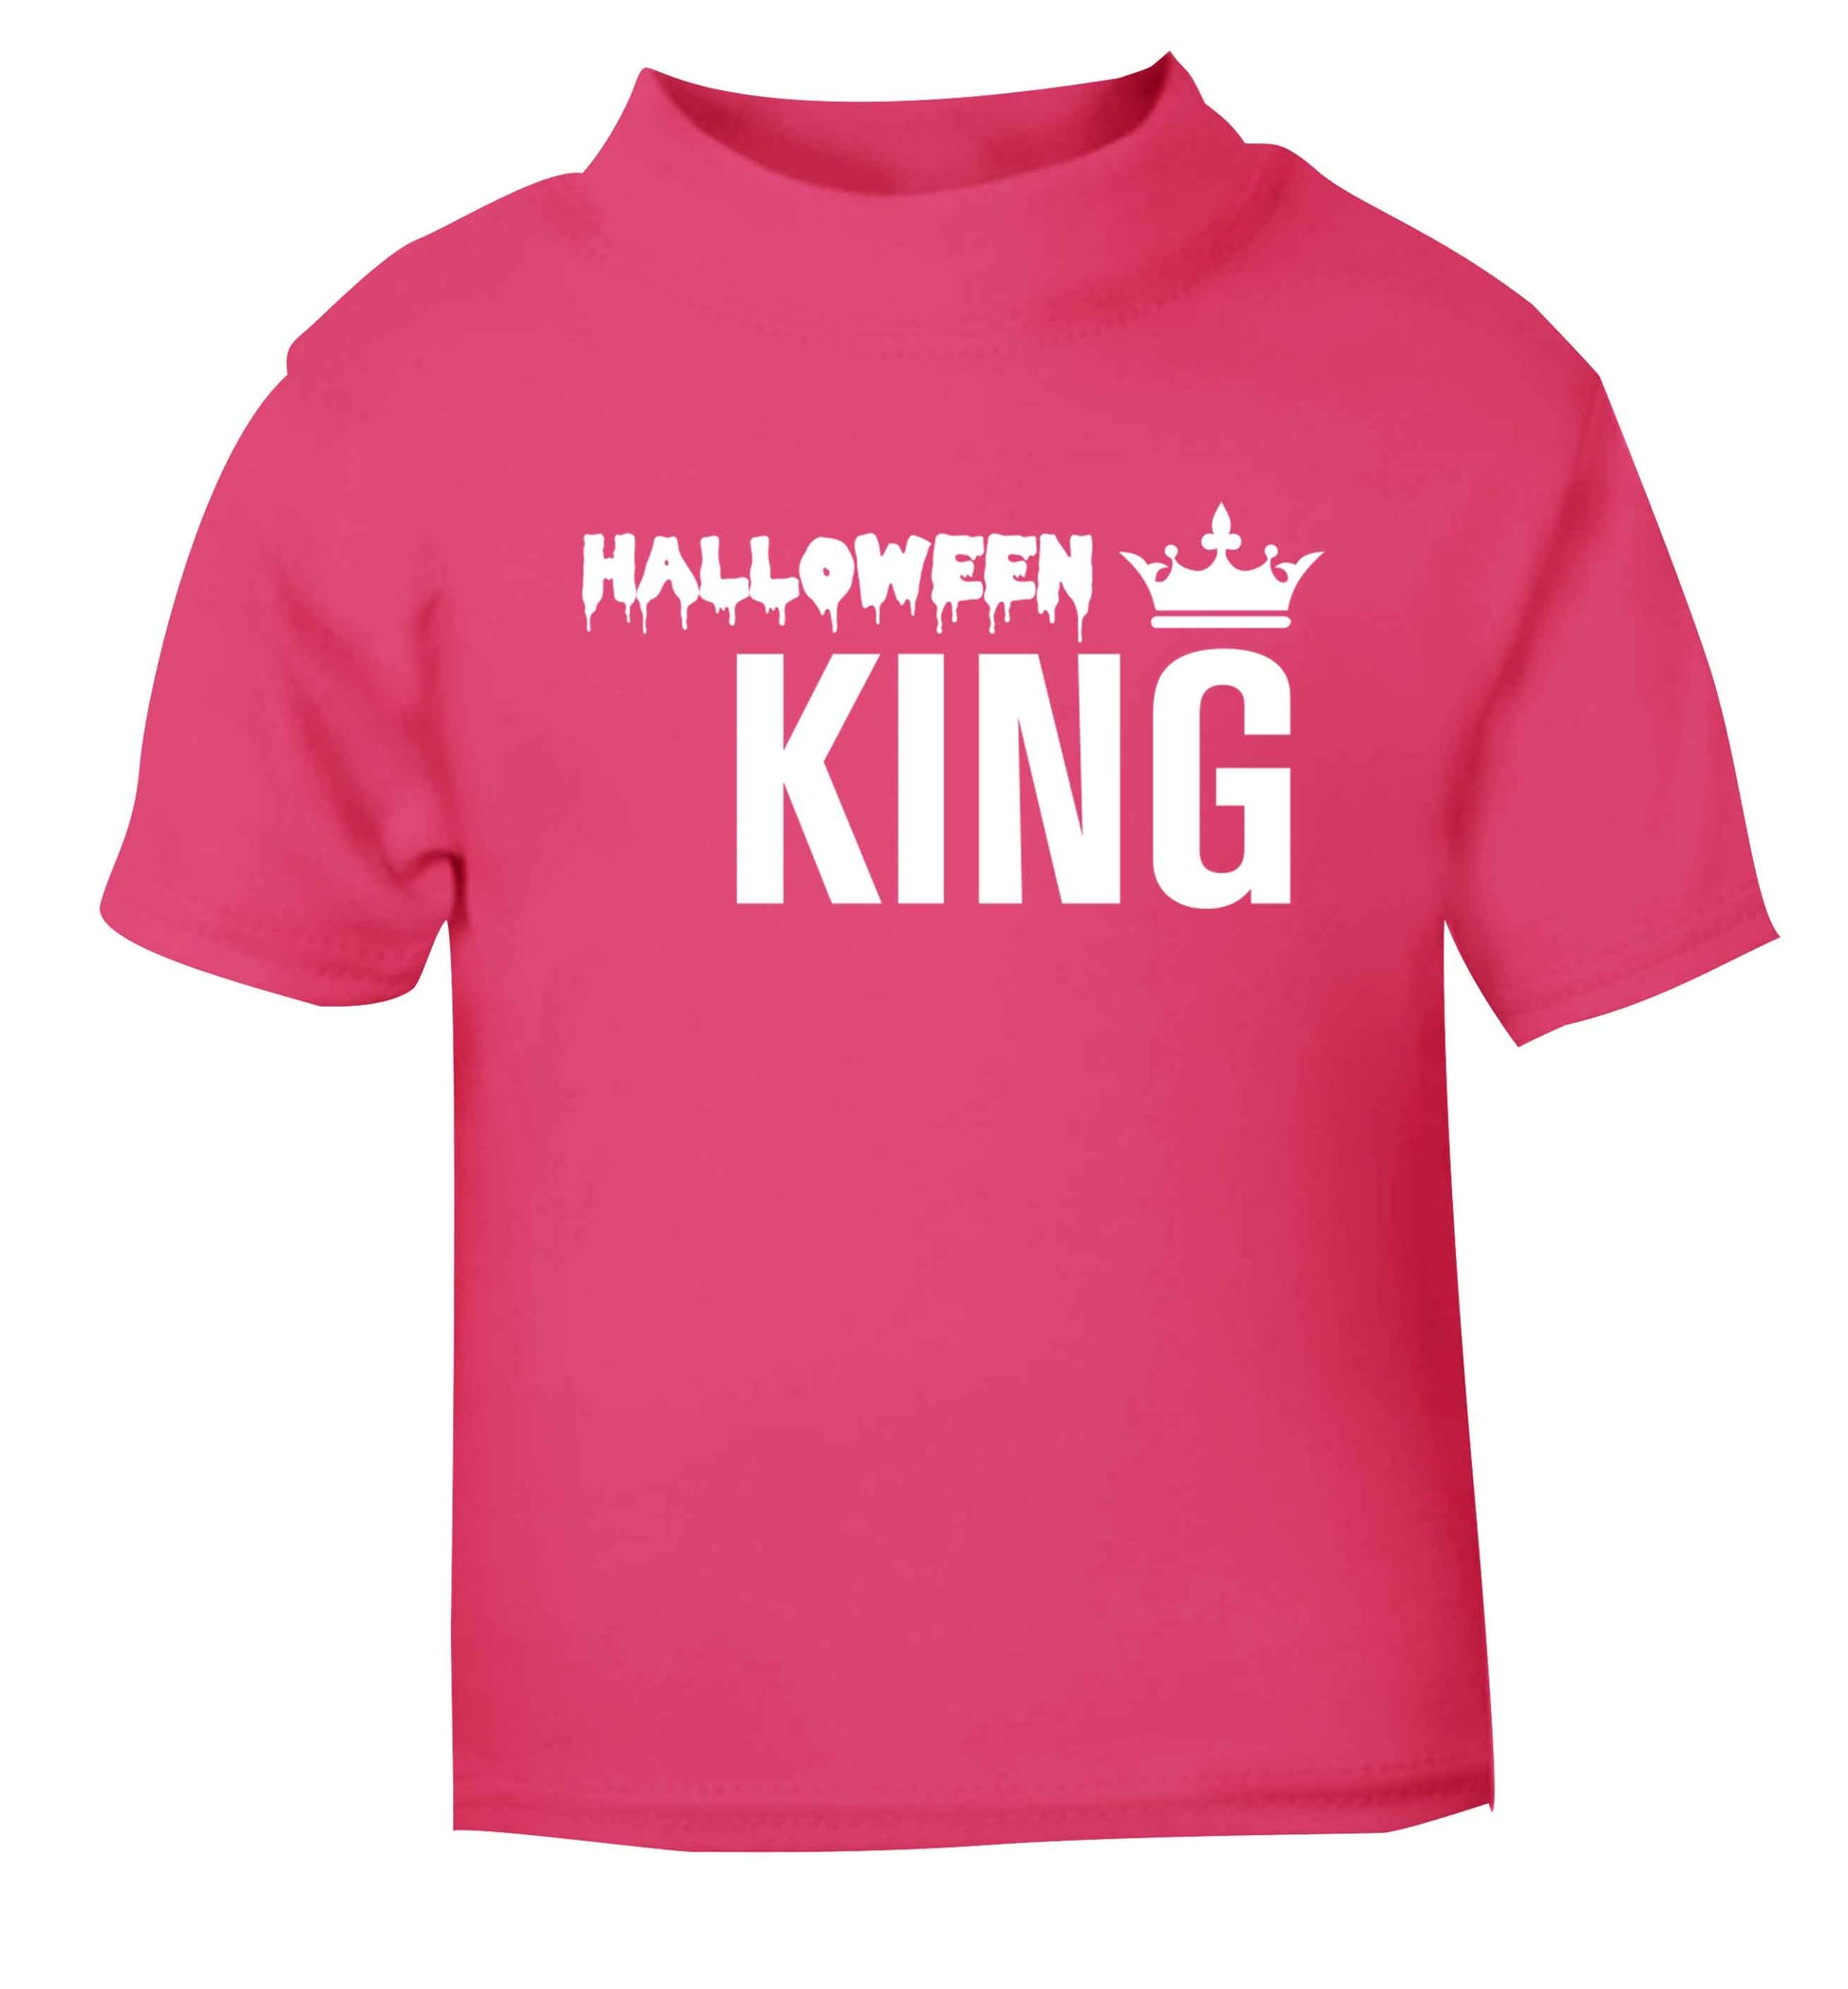 Halloween king pink baby toddler Tshirt 2 Years